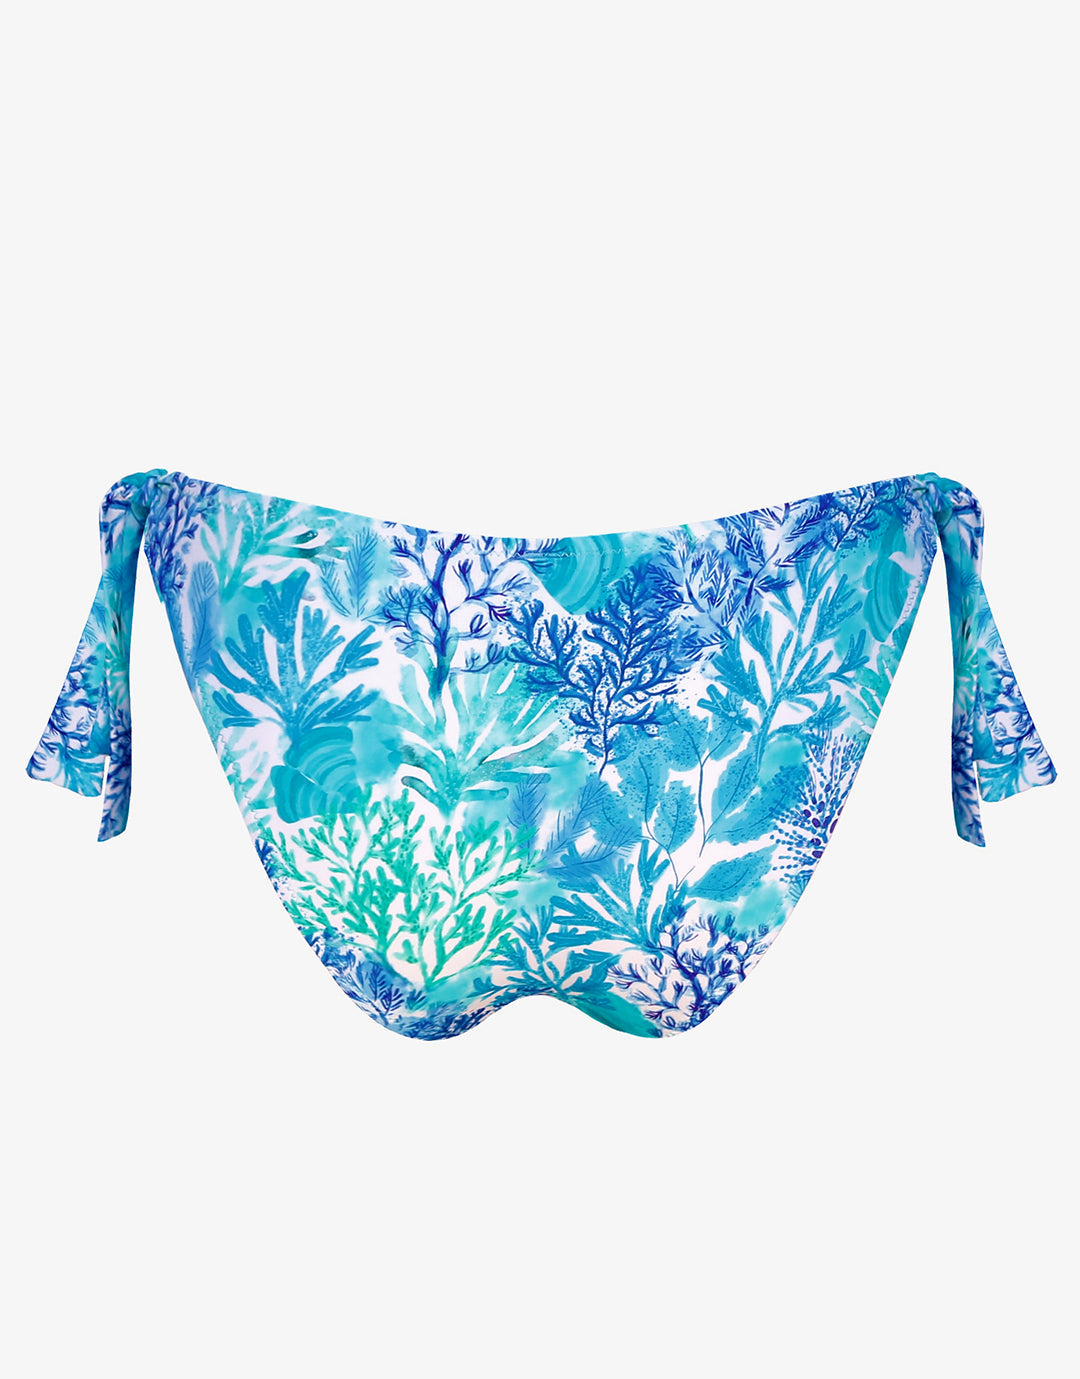 Coral Tie Side Bikini Pant - Turquoise - Simply Beach UK